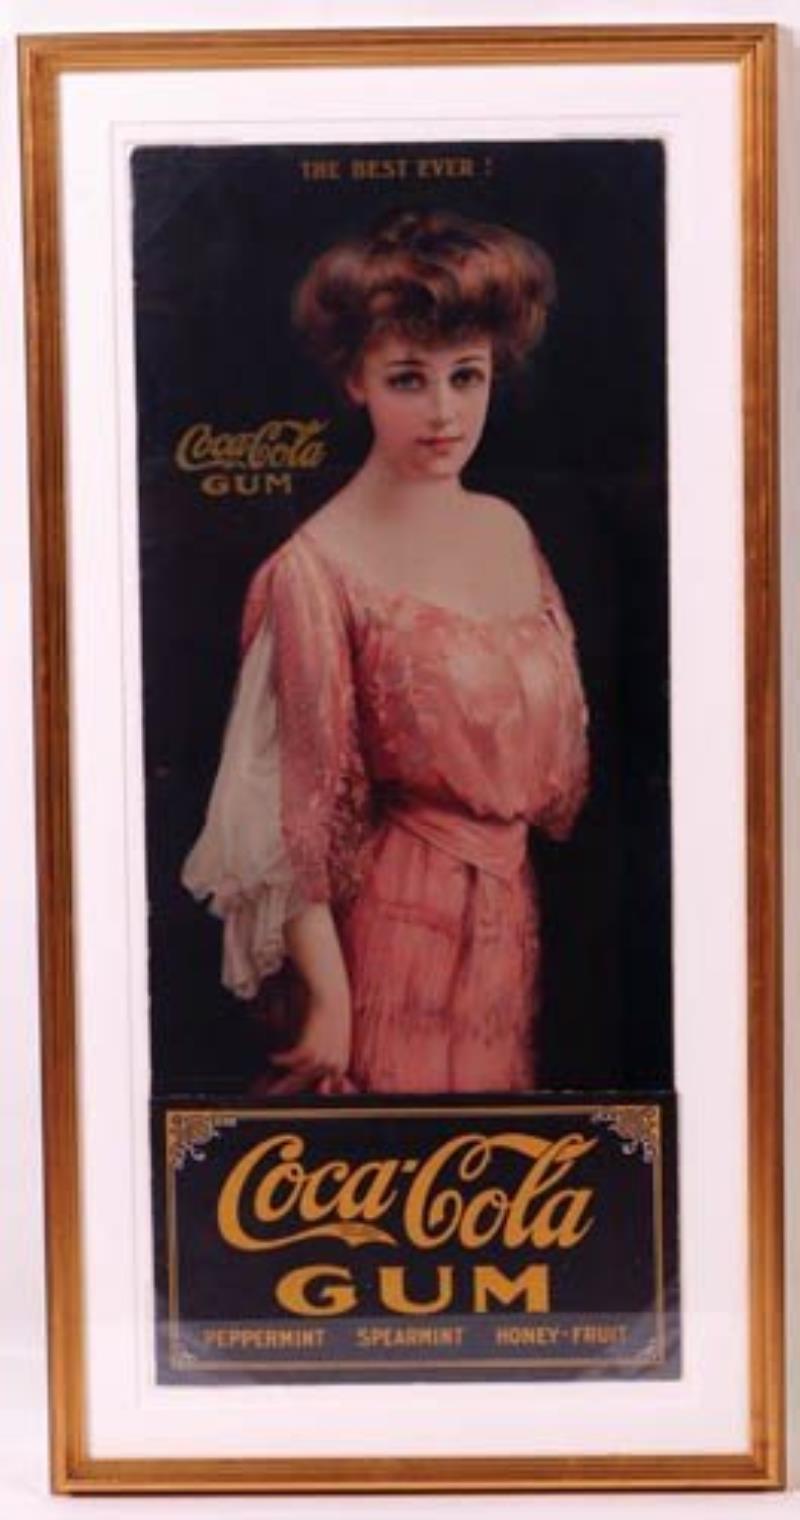 1916 Coca-Cola Chewing Gum, display sign